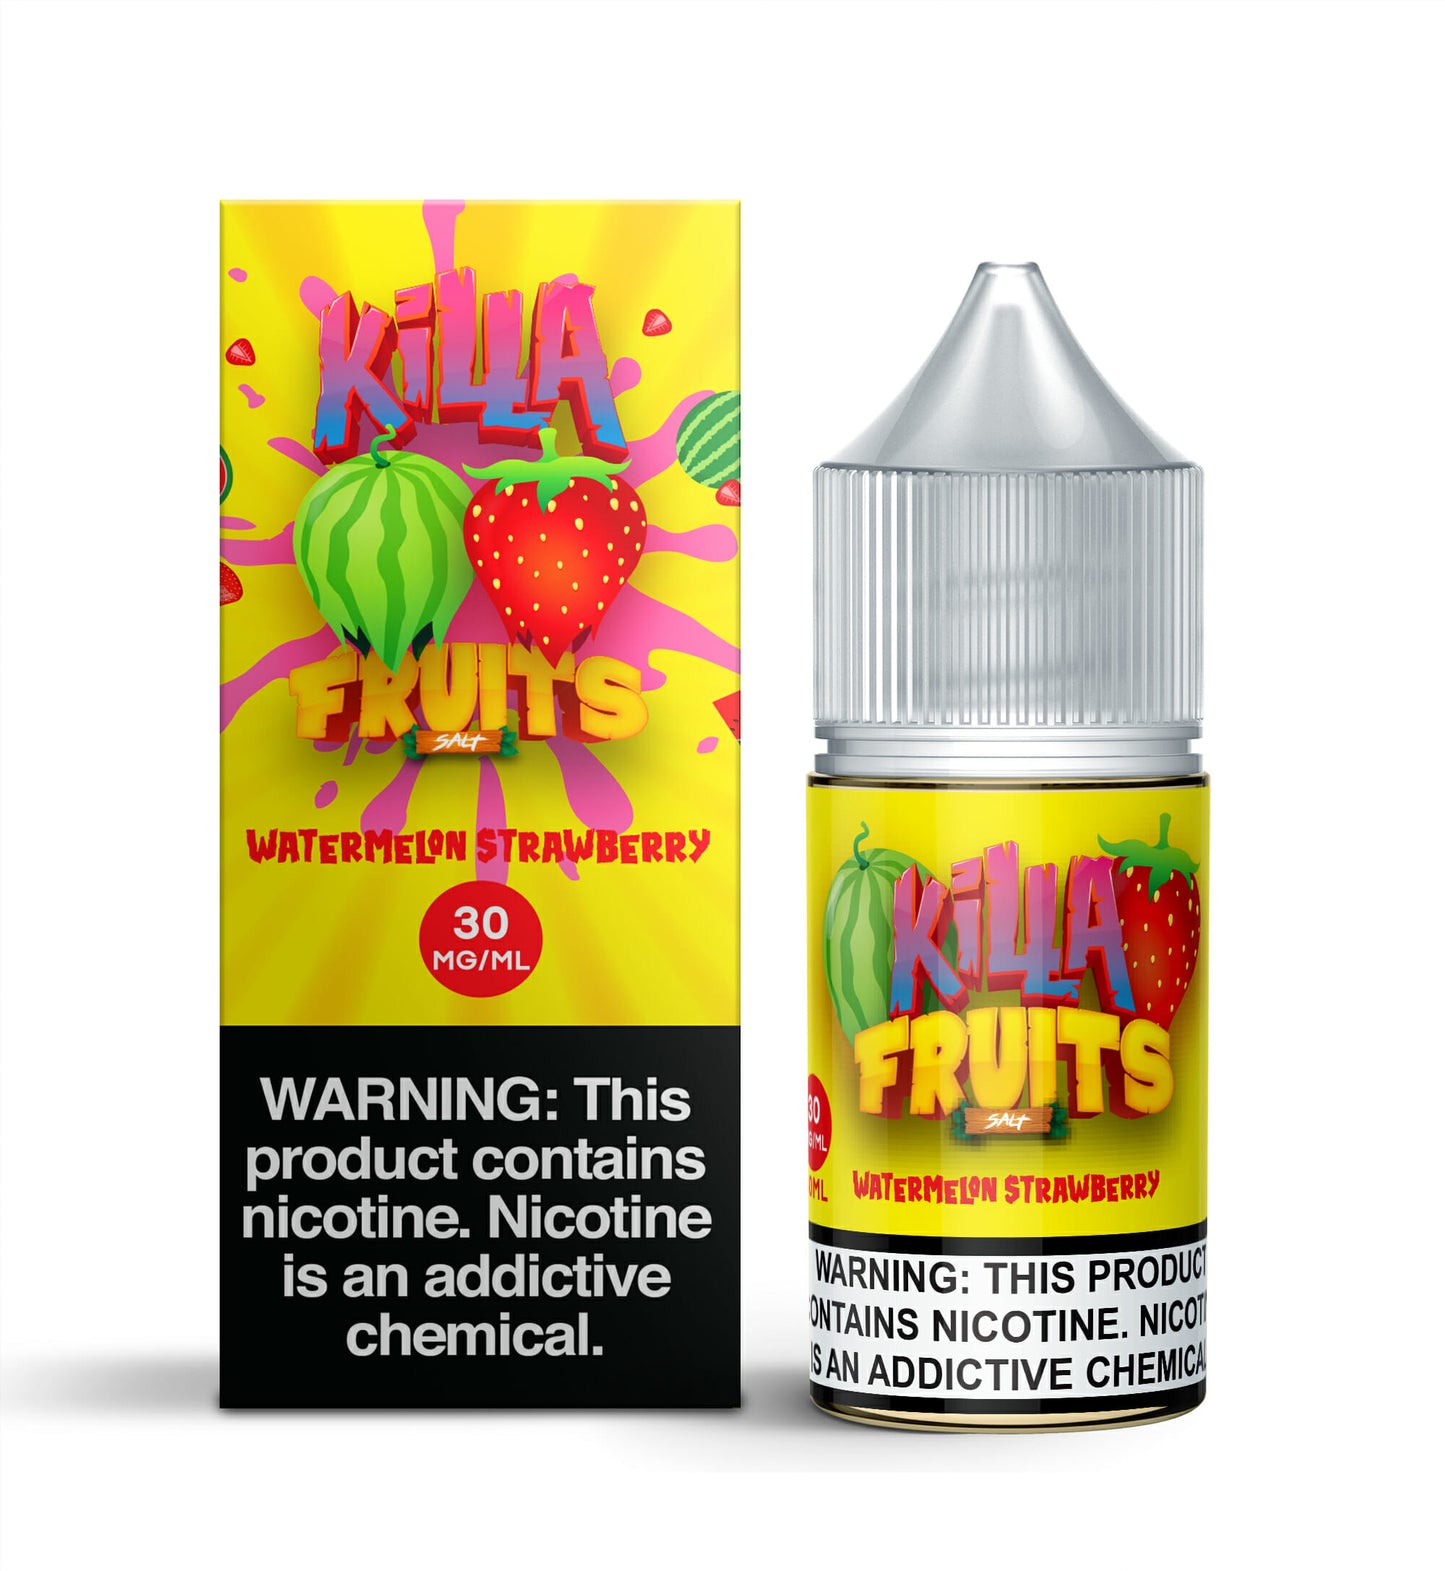 Killa Fruits Salt Series E-Liquid 30mL (Salt Nic) | Watermelon Strawberry with packaging